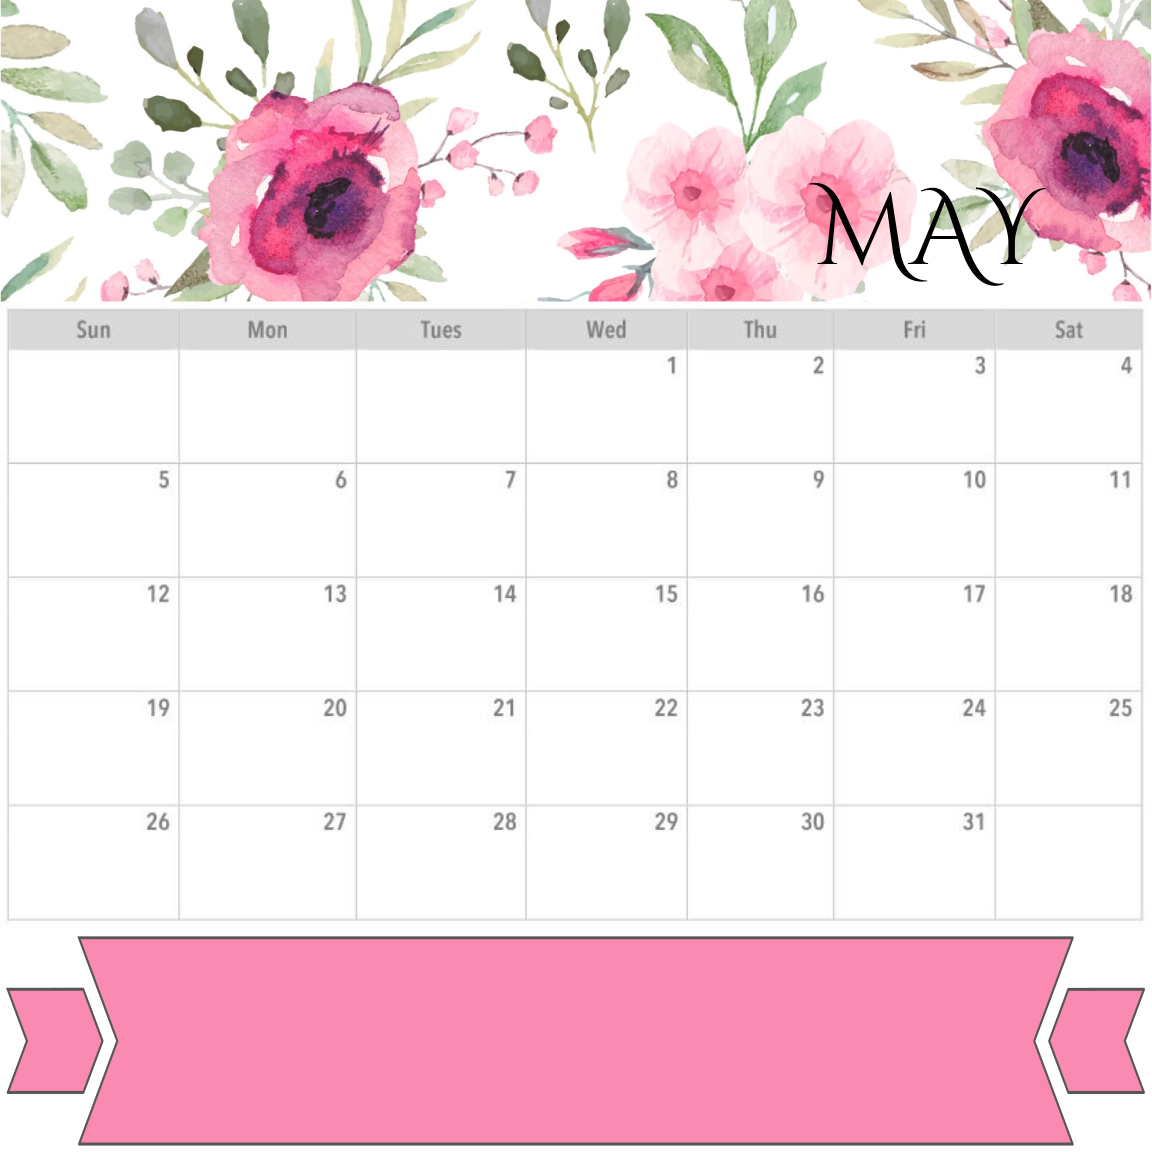 printables-planner-may-2019-calendar-monthly-weekly-planner-iamgeetha